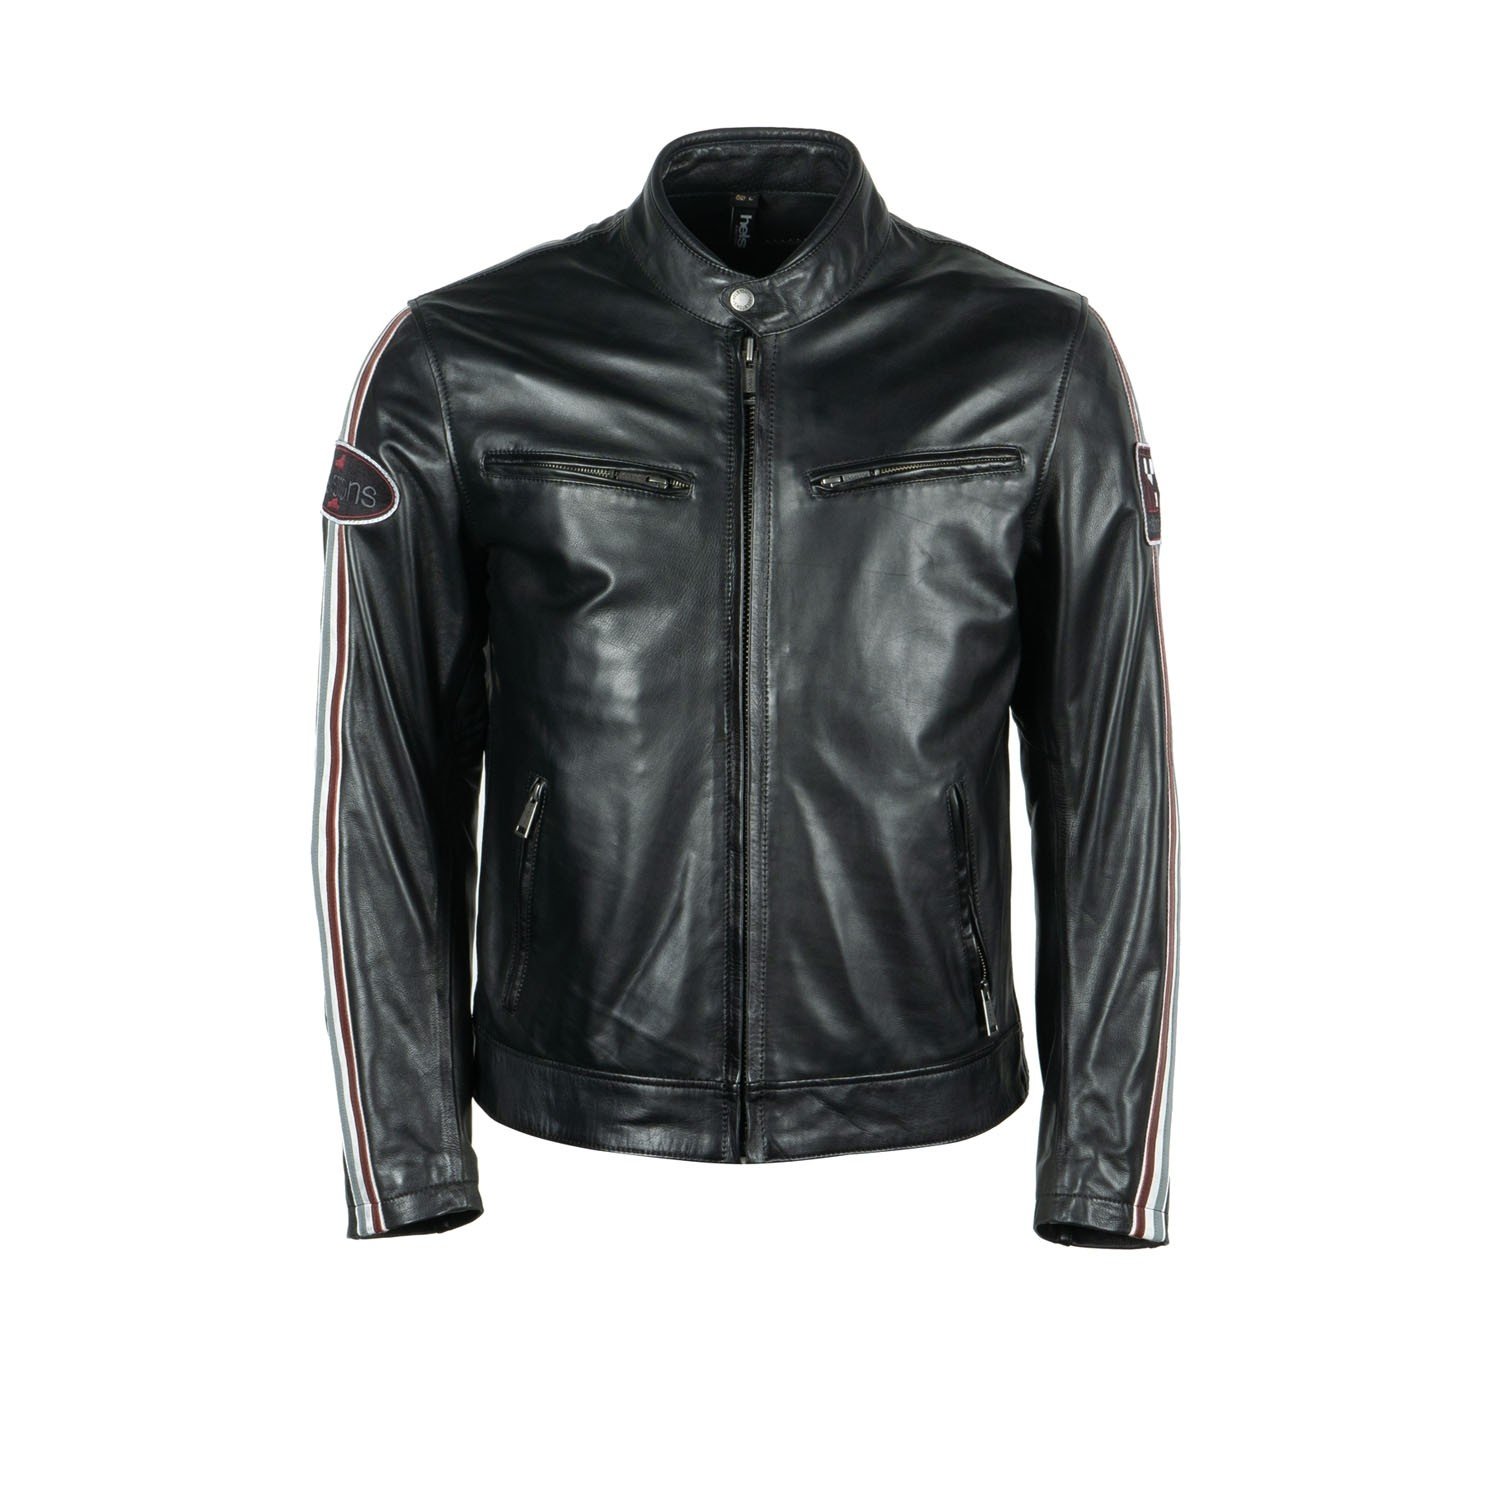 Image of Helstons Race Leather Aniline Jacket Black Size M ID 3662136083127